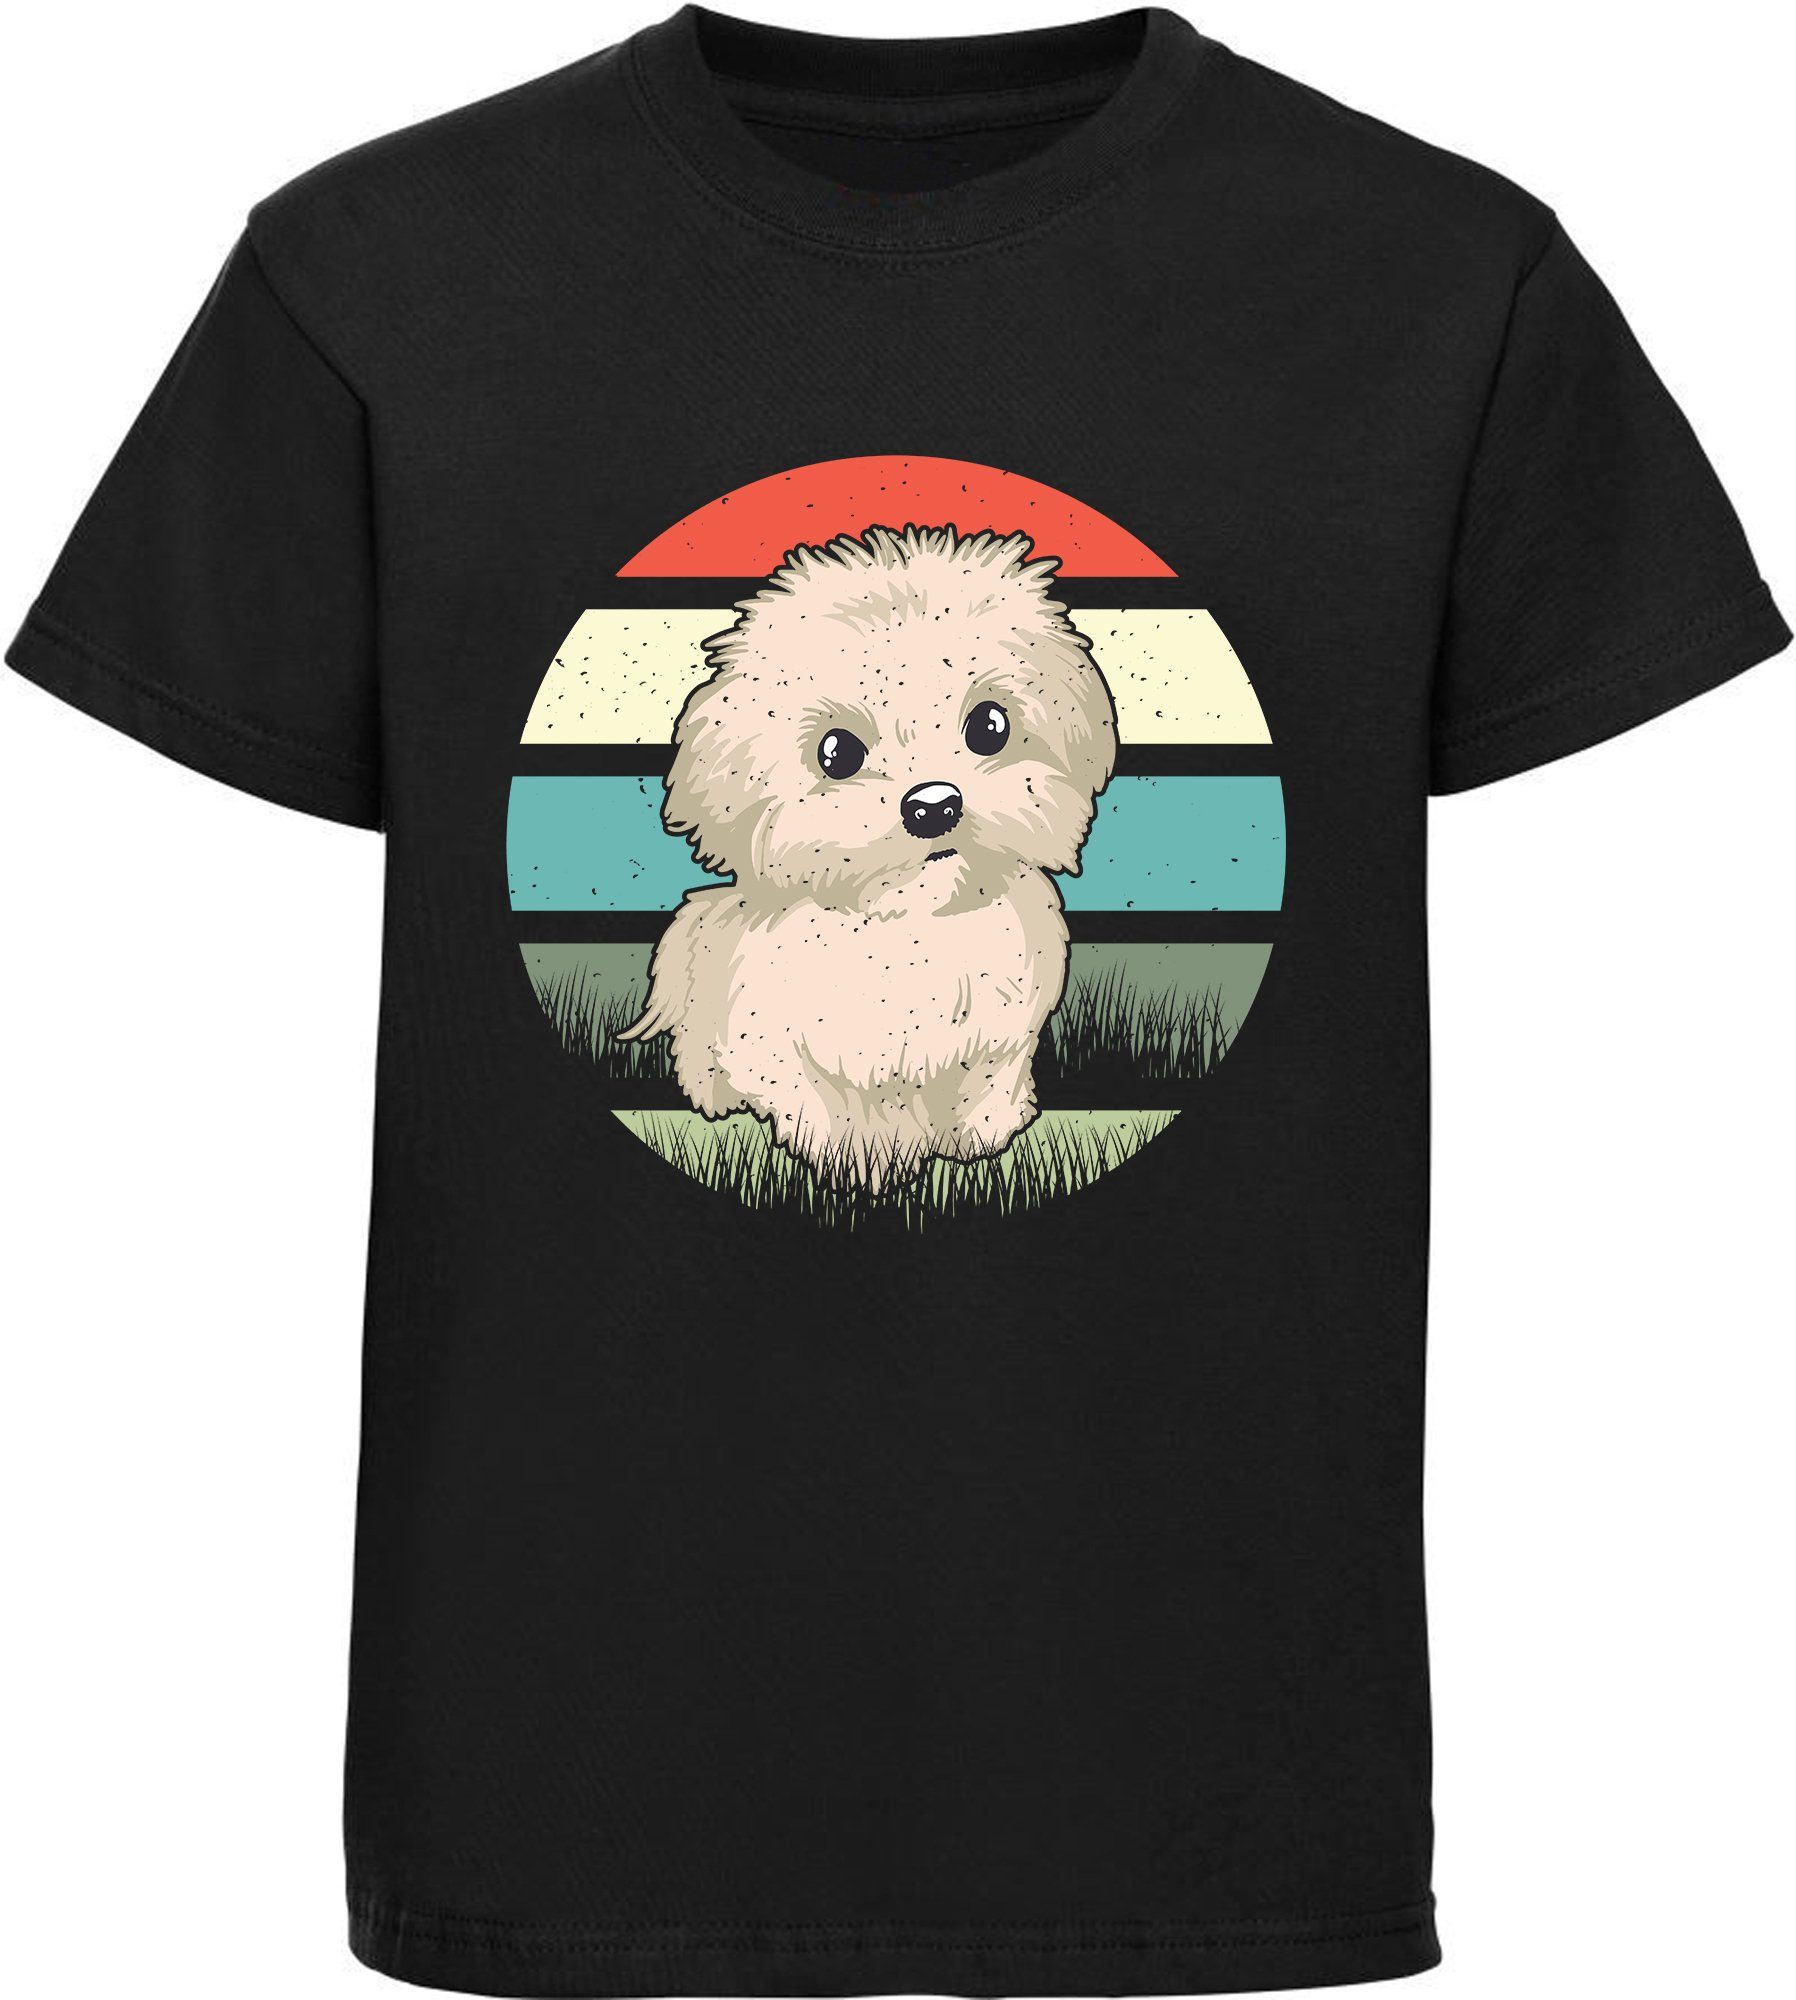 MyDesign24 Print-Shirt i242 mit Baumwollshirt Kinder schwarz Welpen T-Shirt - Hunde Aufdruck, Malteser bedruckt Retro